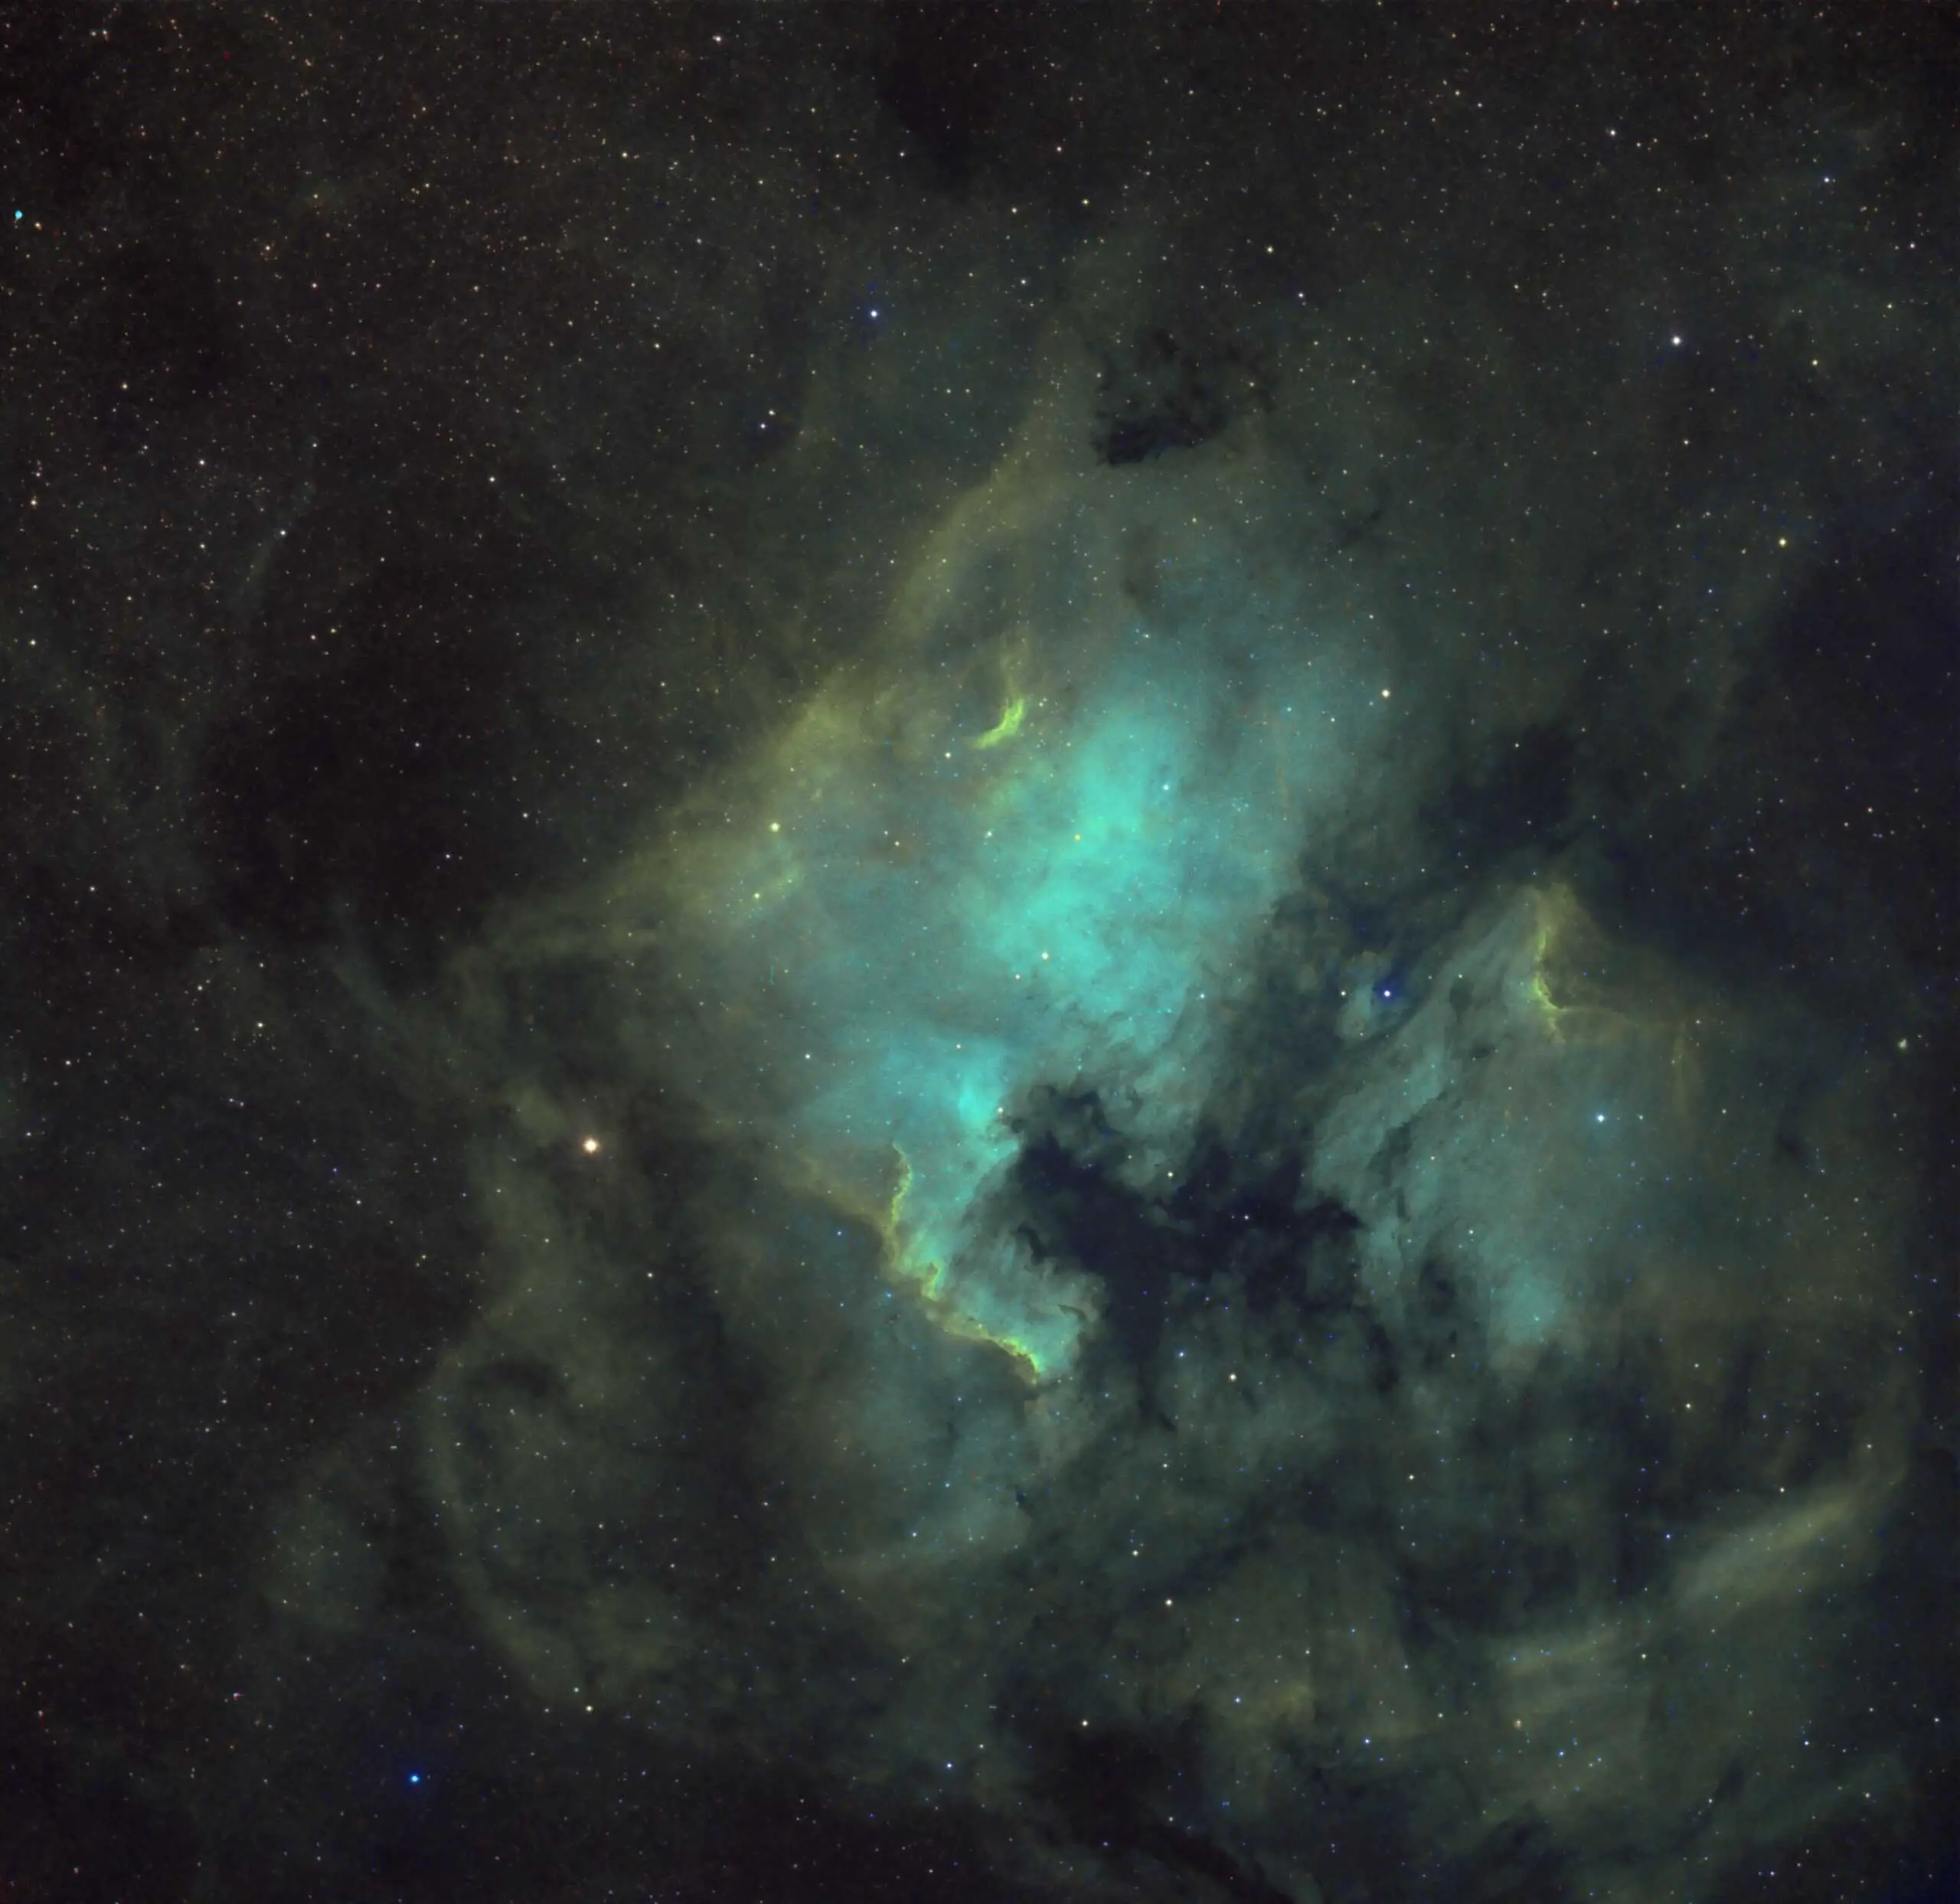 North America & Pelican nebulae in SHO palette using data from Telescope Live